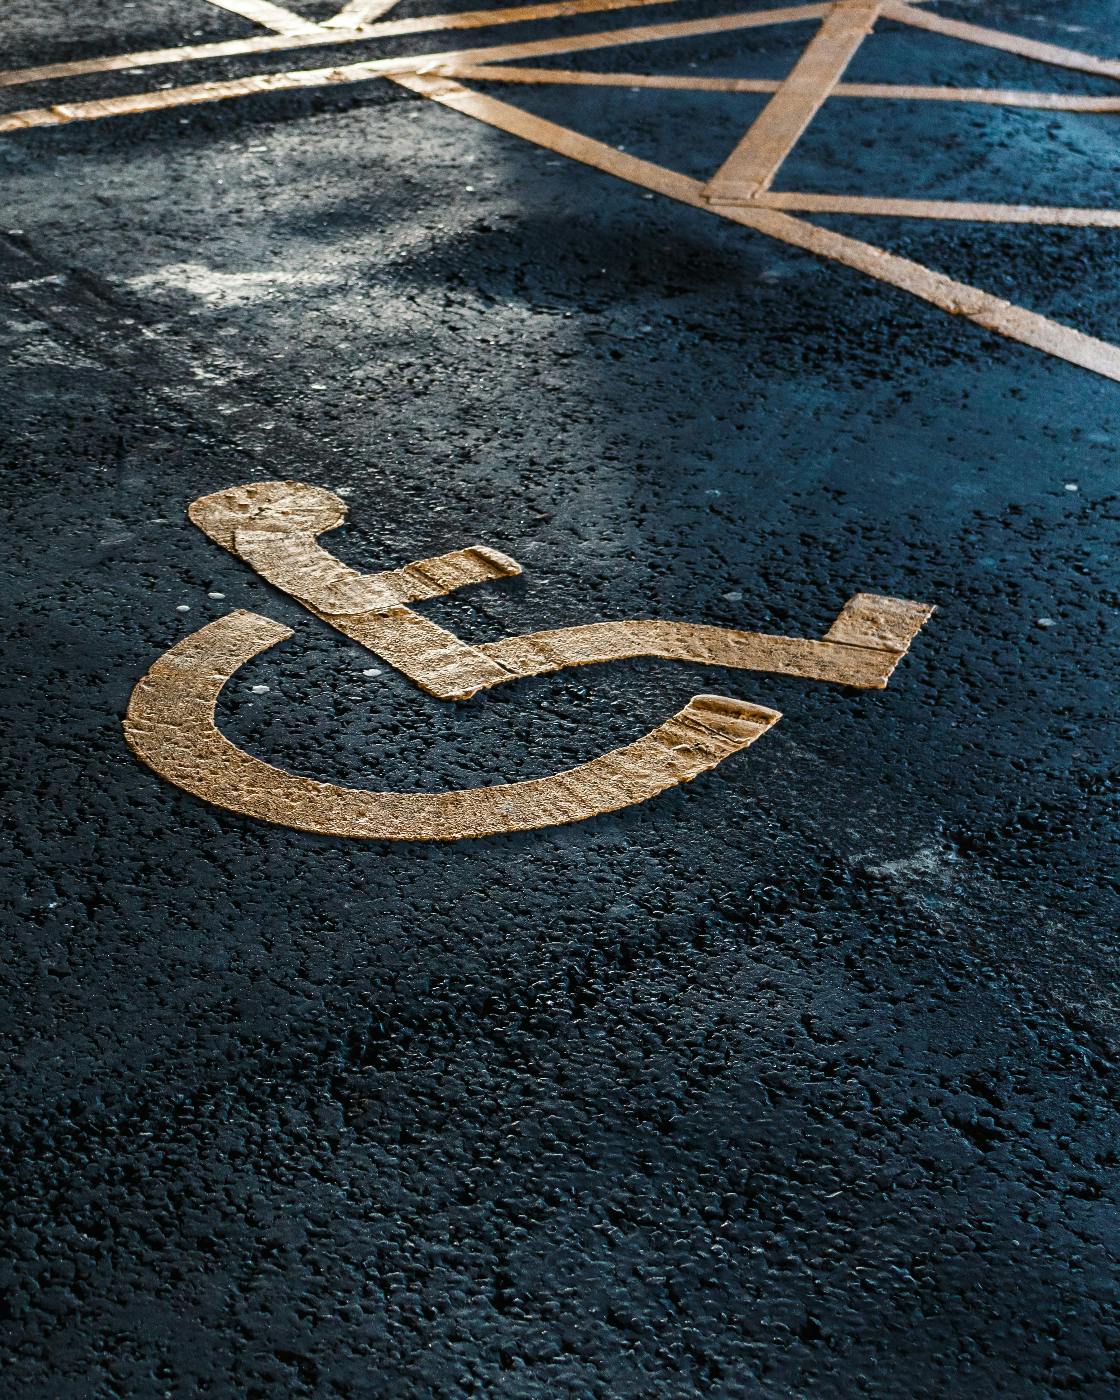 A handicapped parking spece